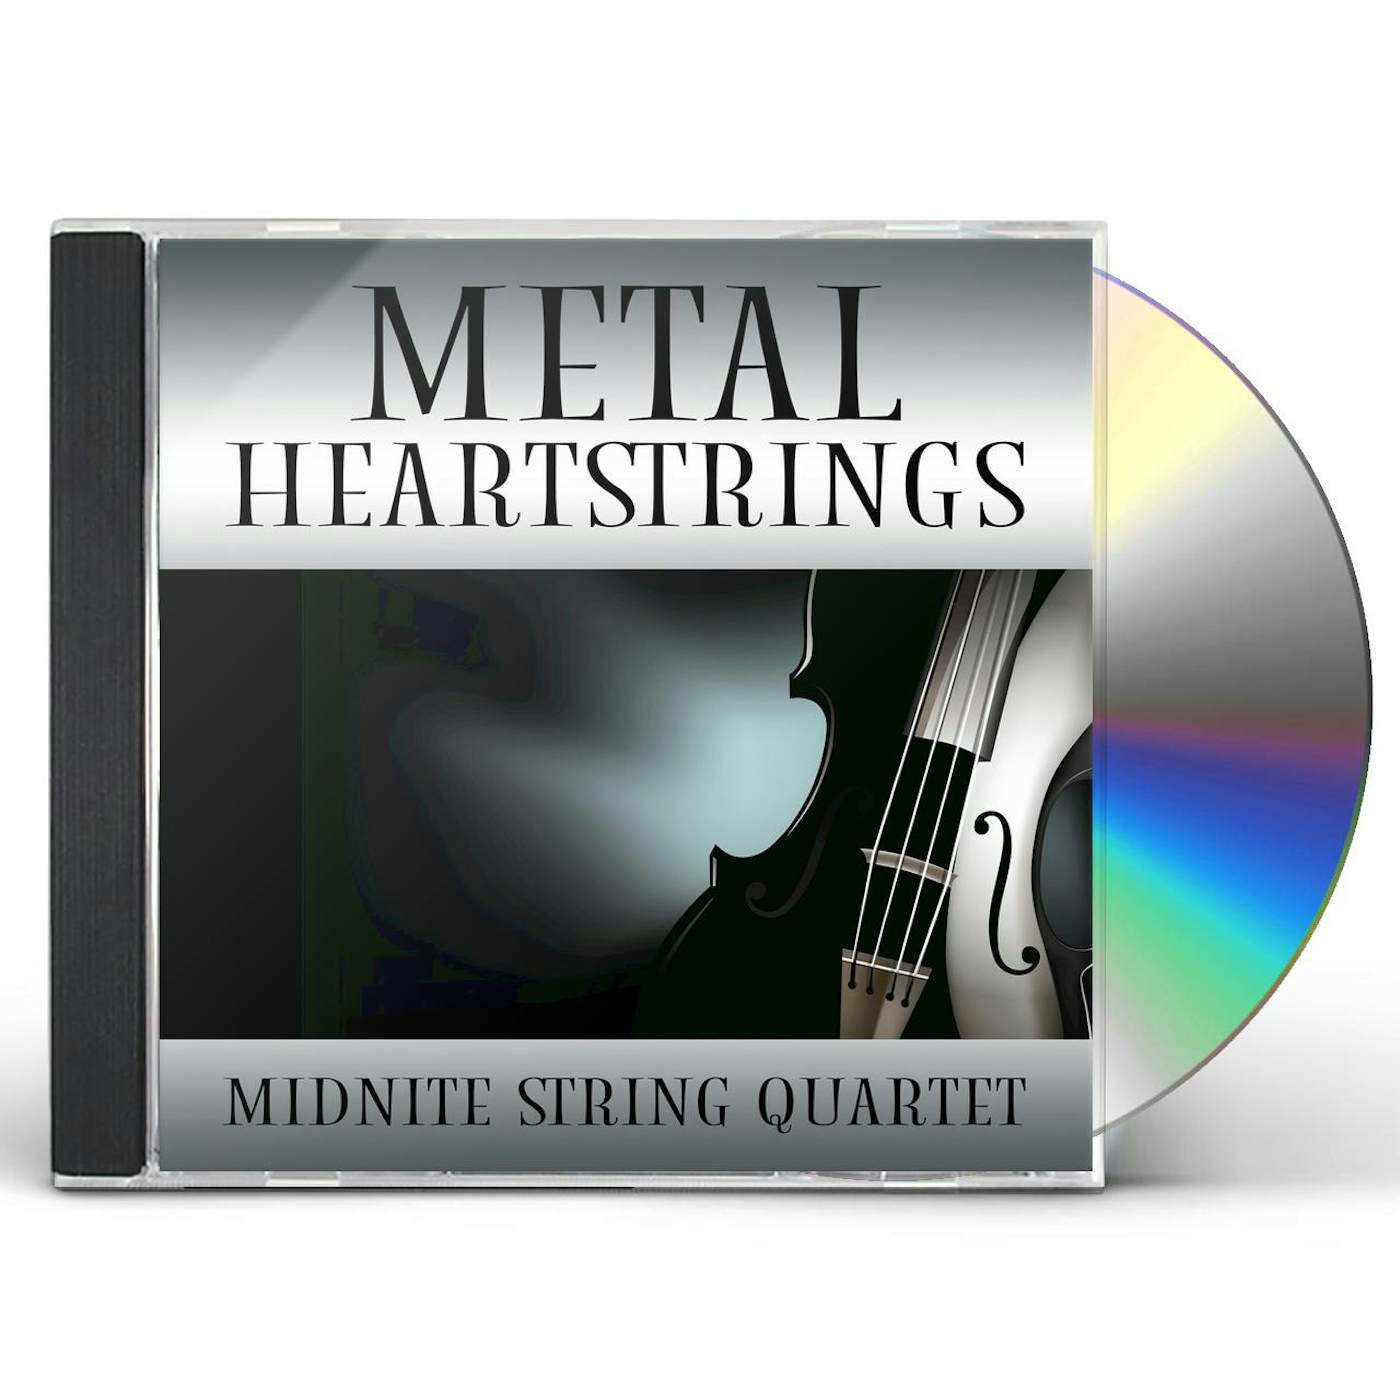 Midnite String Quartet METAL HEARTSTRINGS (MOD) CD